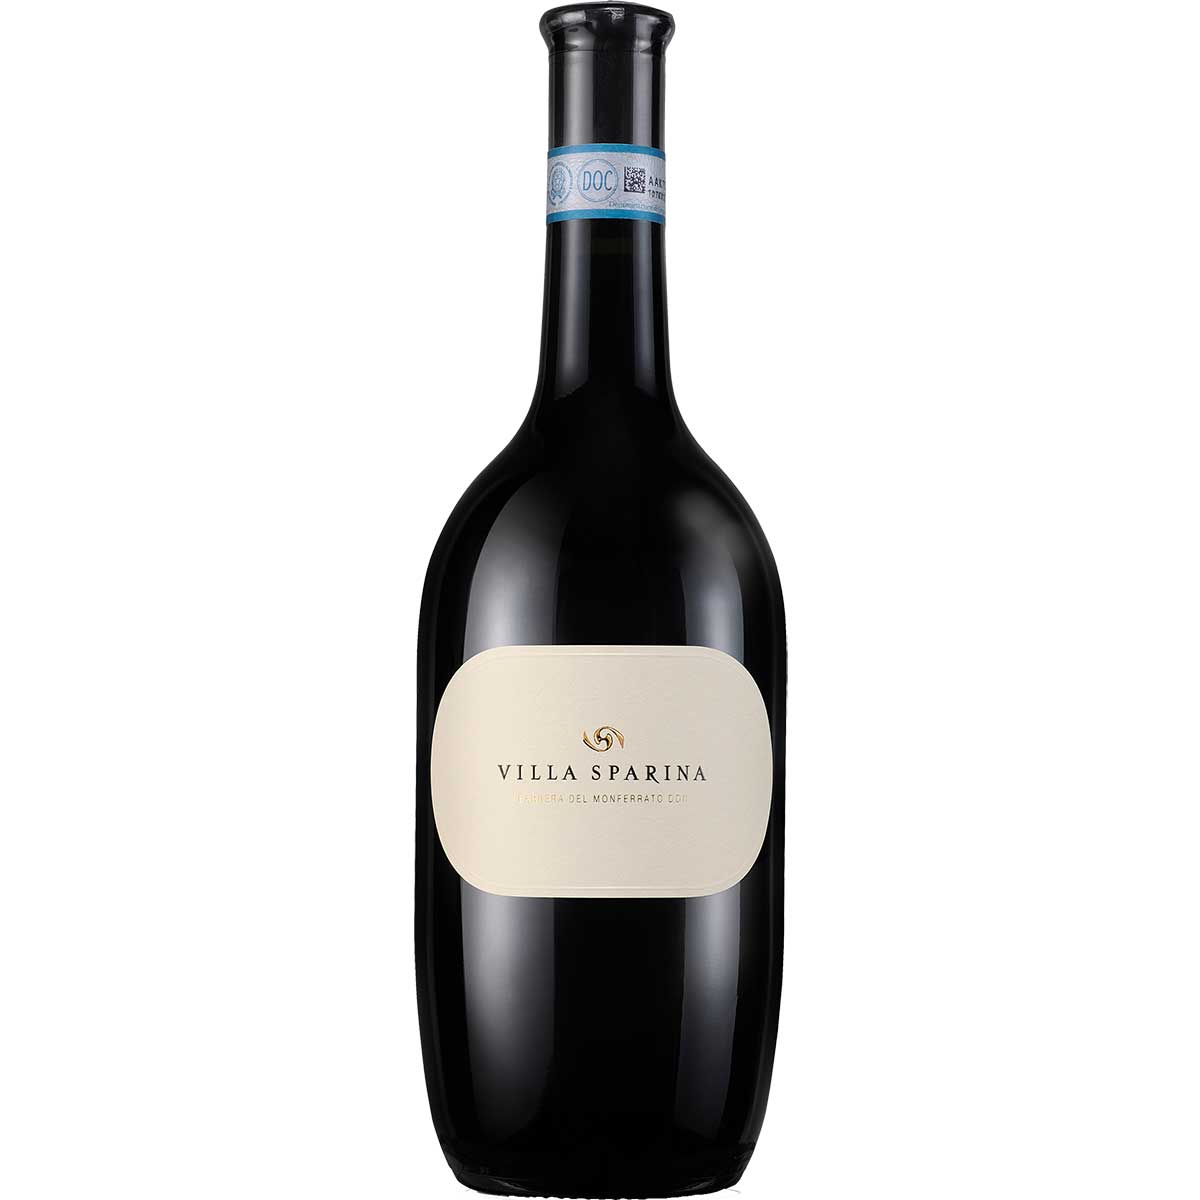 Buy Villa Sparina Barbera del Monferrato at Wines Online Singapore